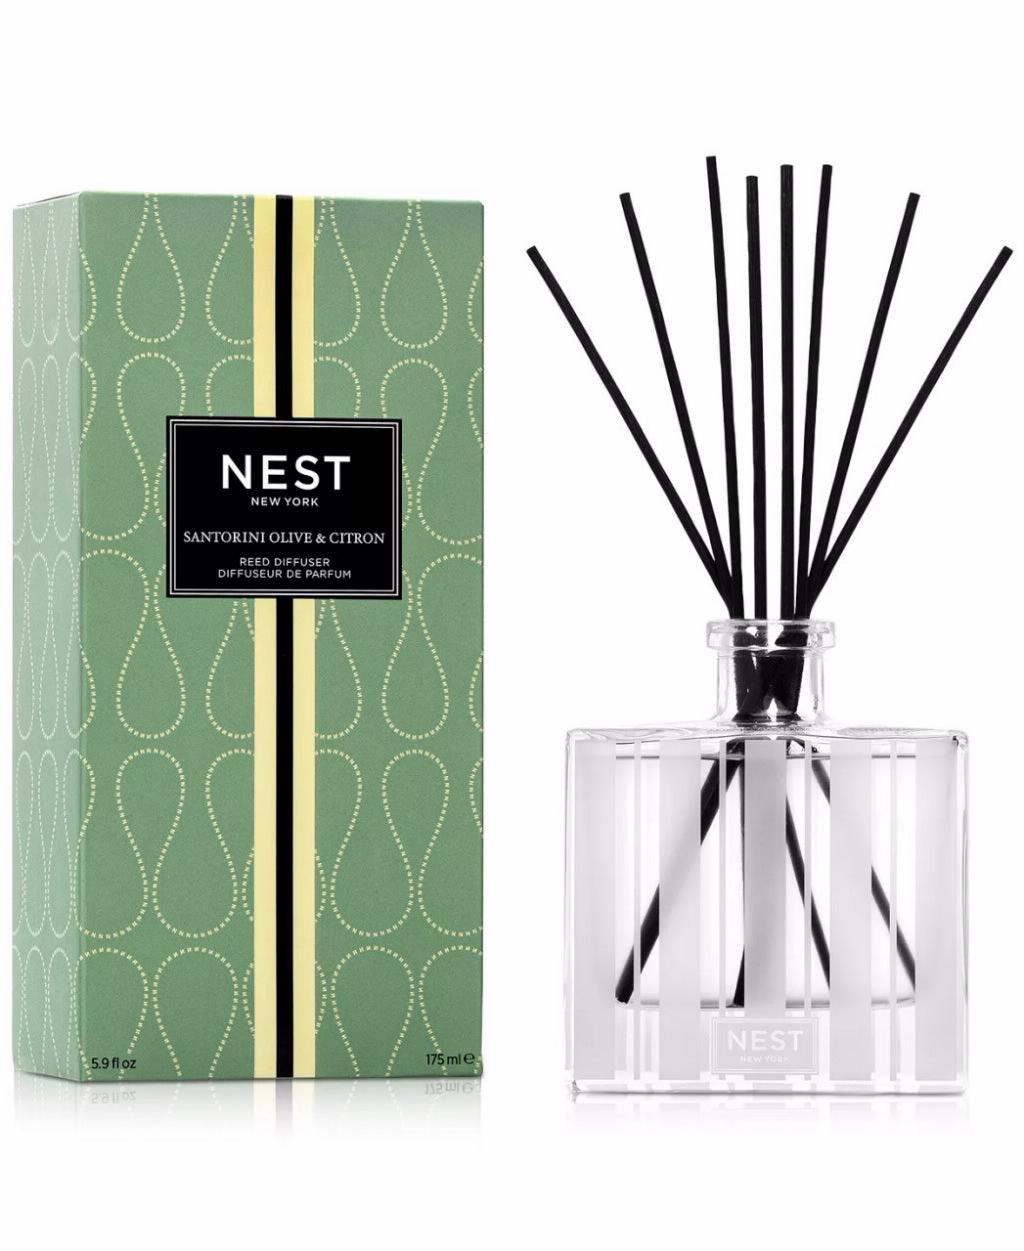 Nest Fragrances Reed Diffuser 5.9 fl.oz/175ml - Santorini Olive & Citron